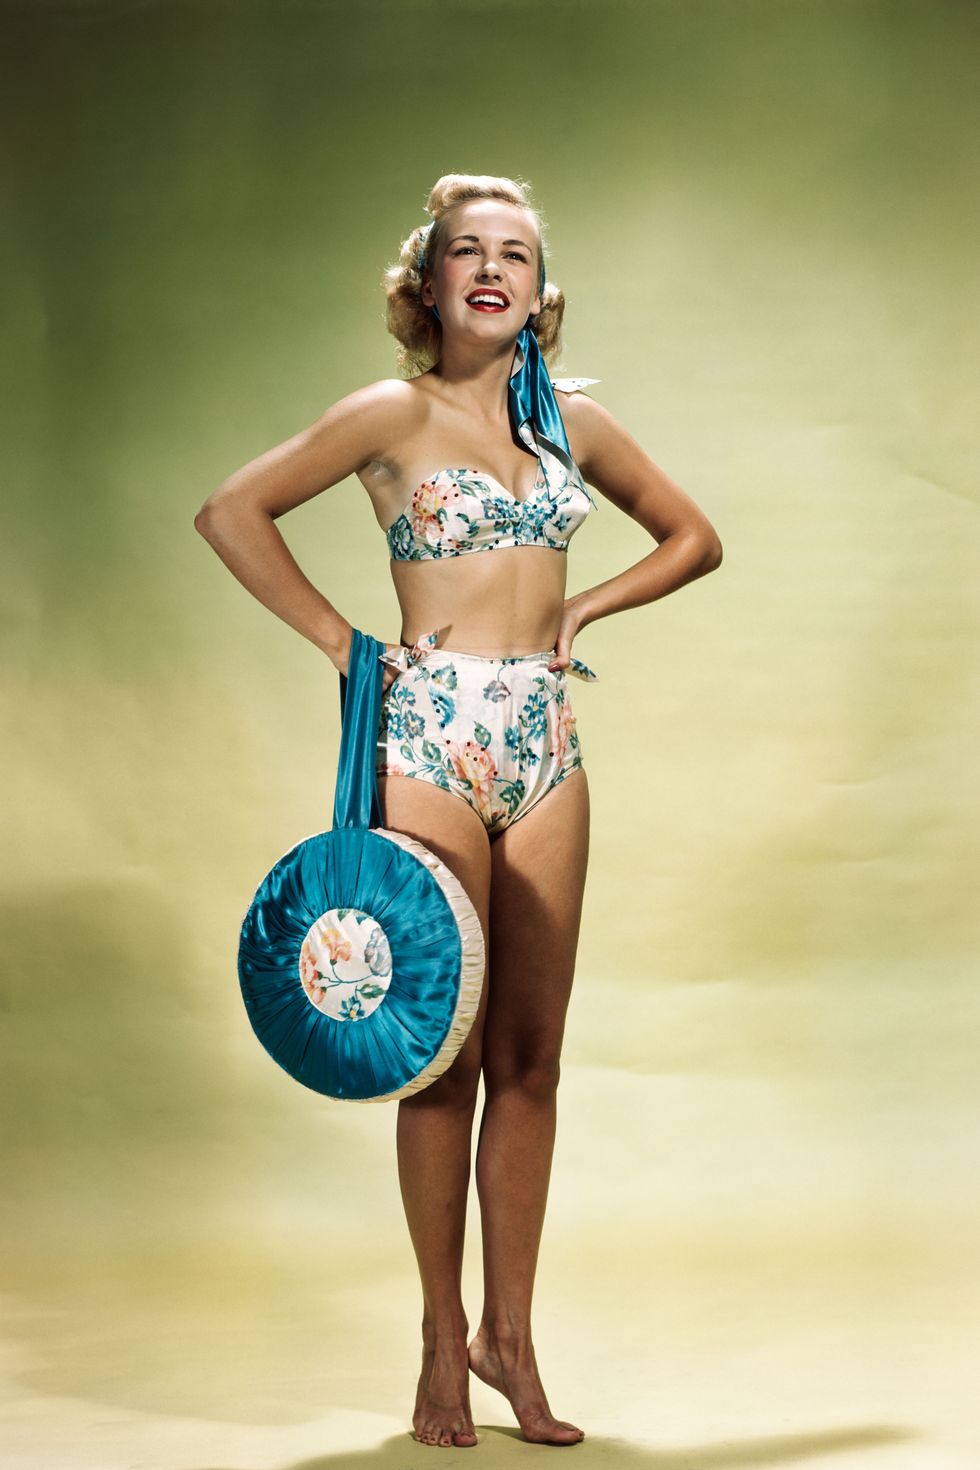 100 Vintage Bikinis - Pictures of Classic Bikinis